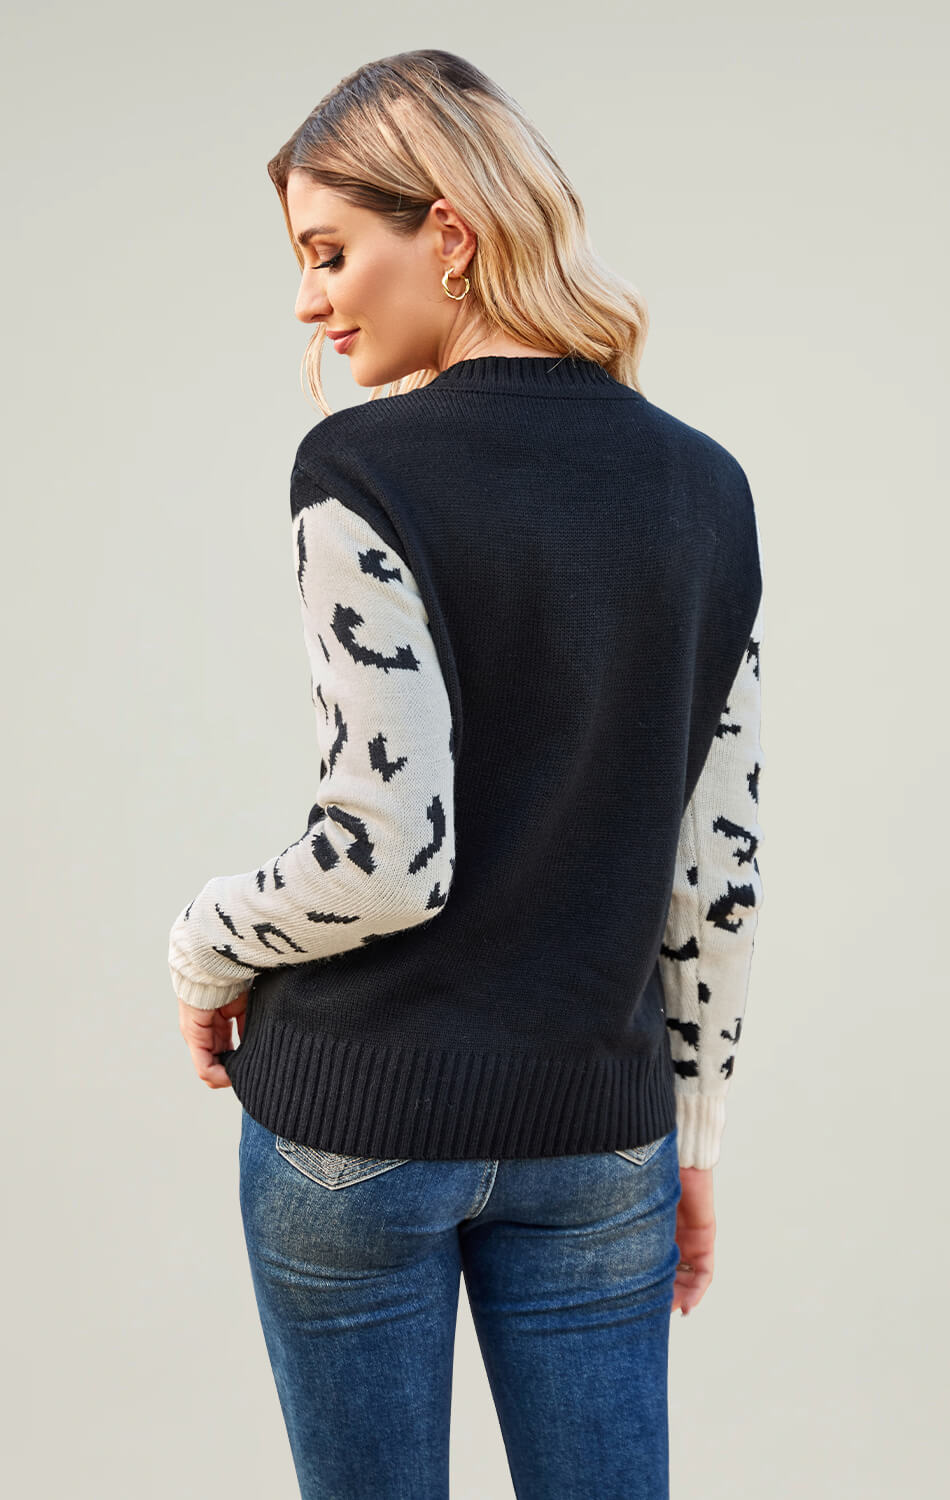 Shop Angashion's Stylish Women's Leopard Printed Sweaters